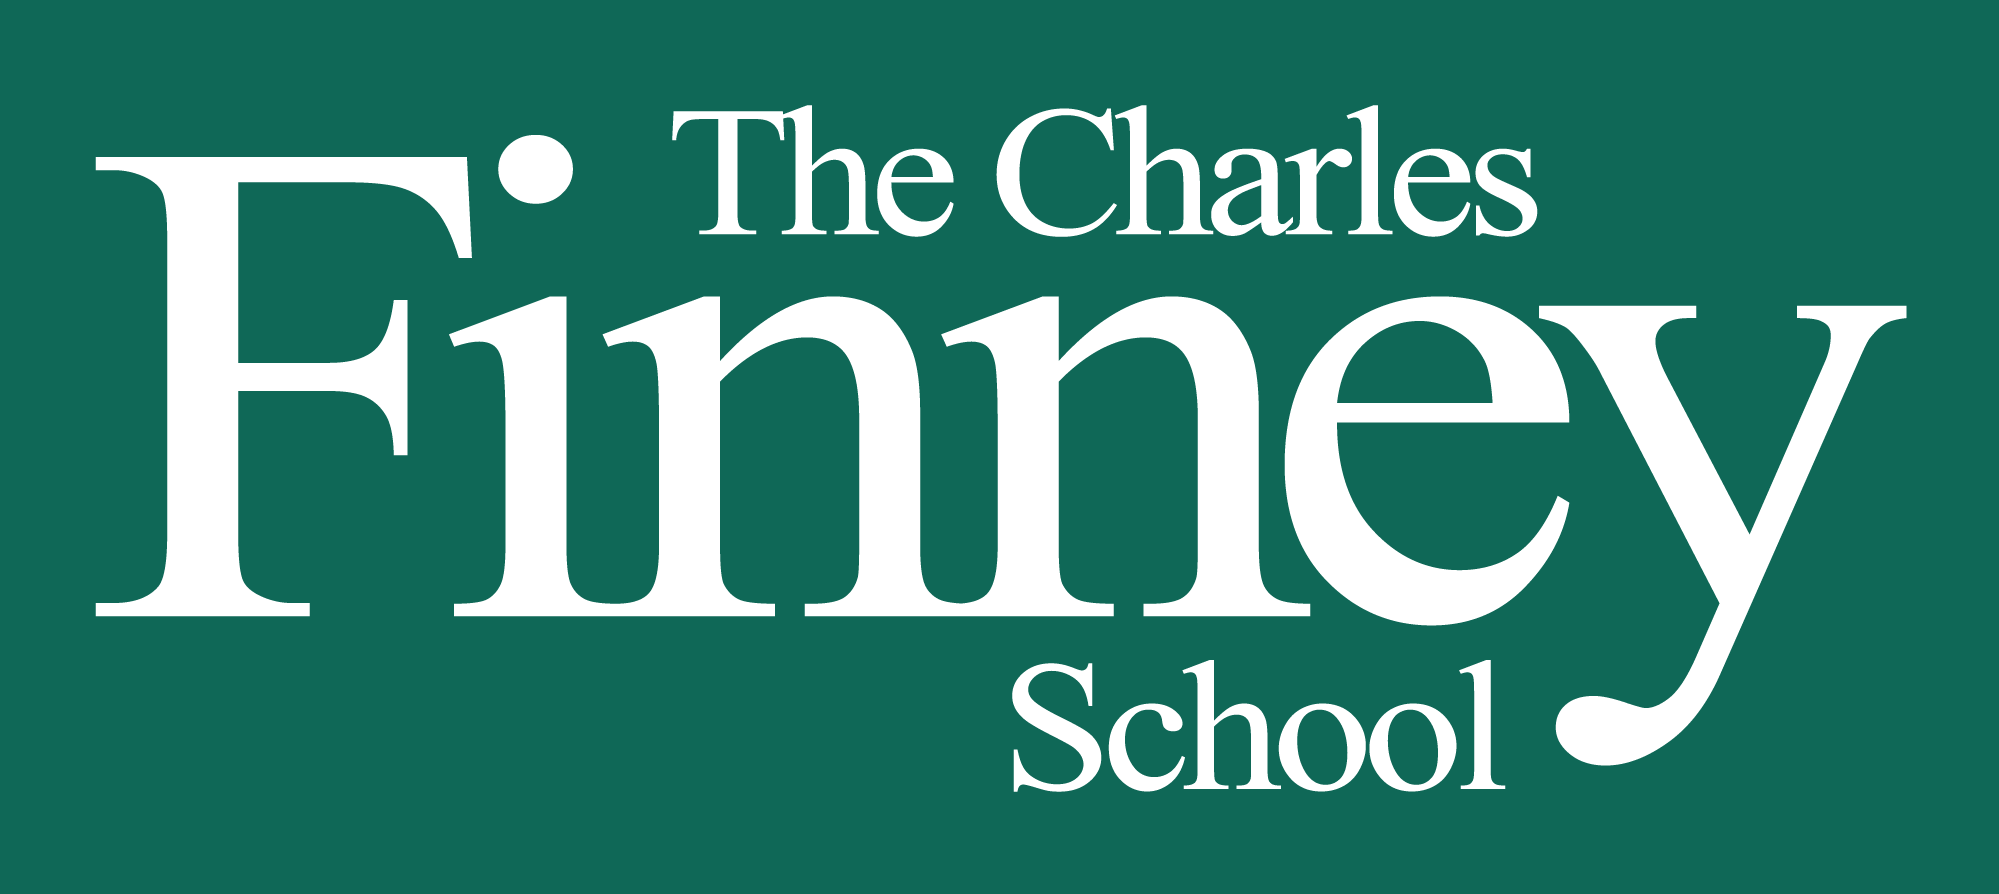 The Charles Finney School logo